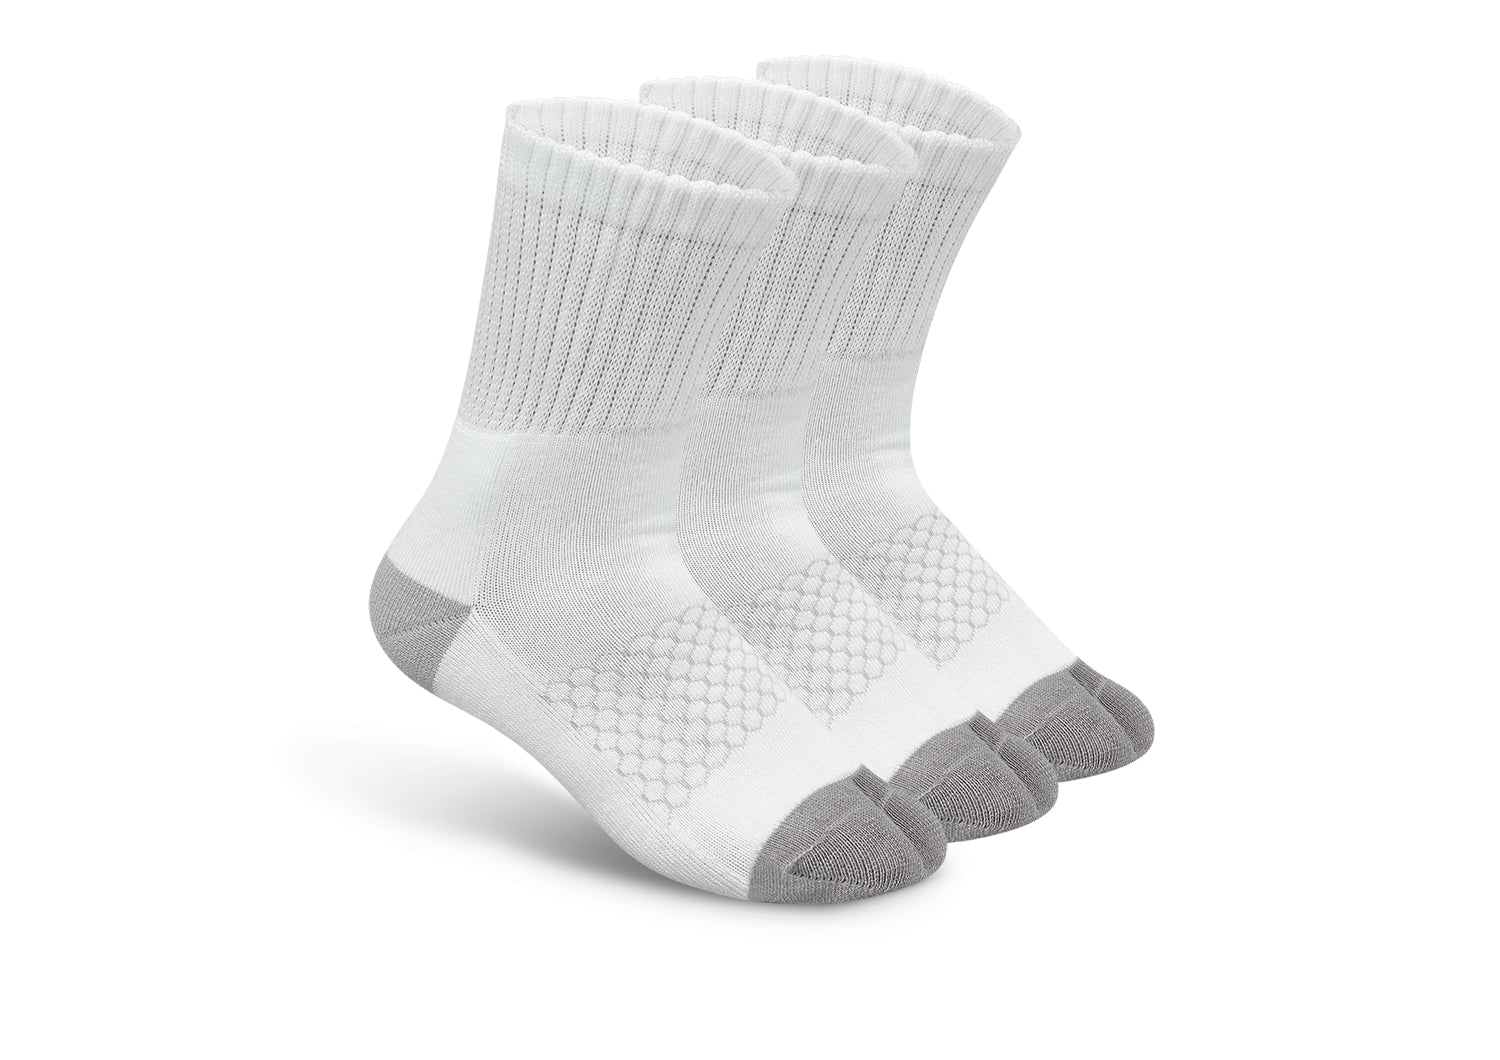 Projoint Antibunions Health Sock Orthoes Bunion Relief Socks Sock Align Toe Socks  for Bunion Orthoes Bunion Relief Socks Women (10pink)